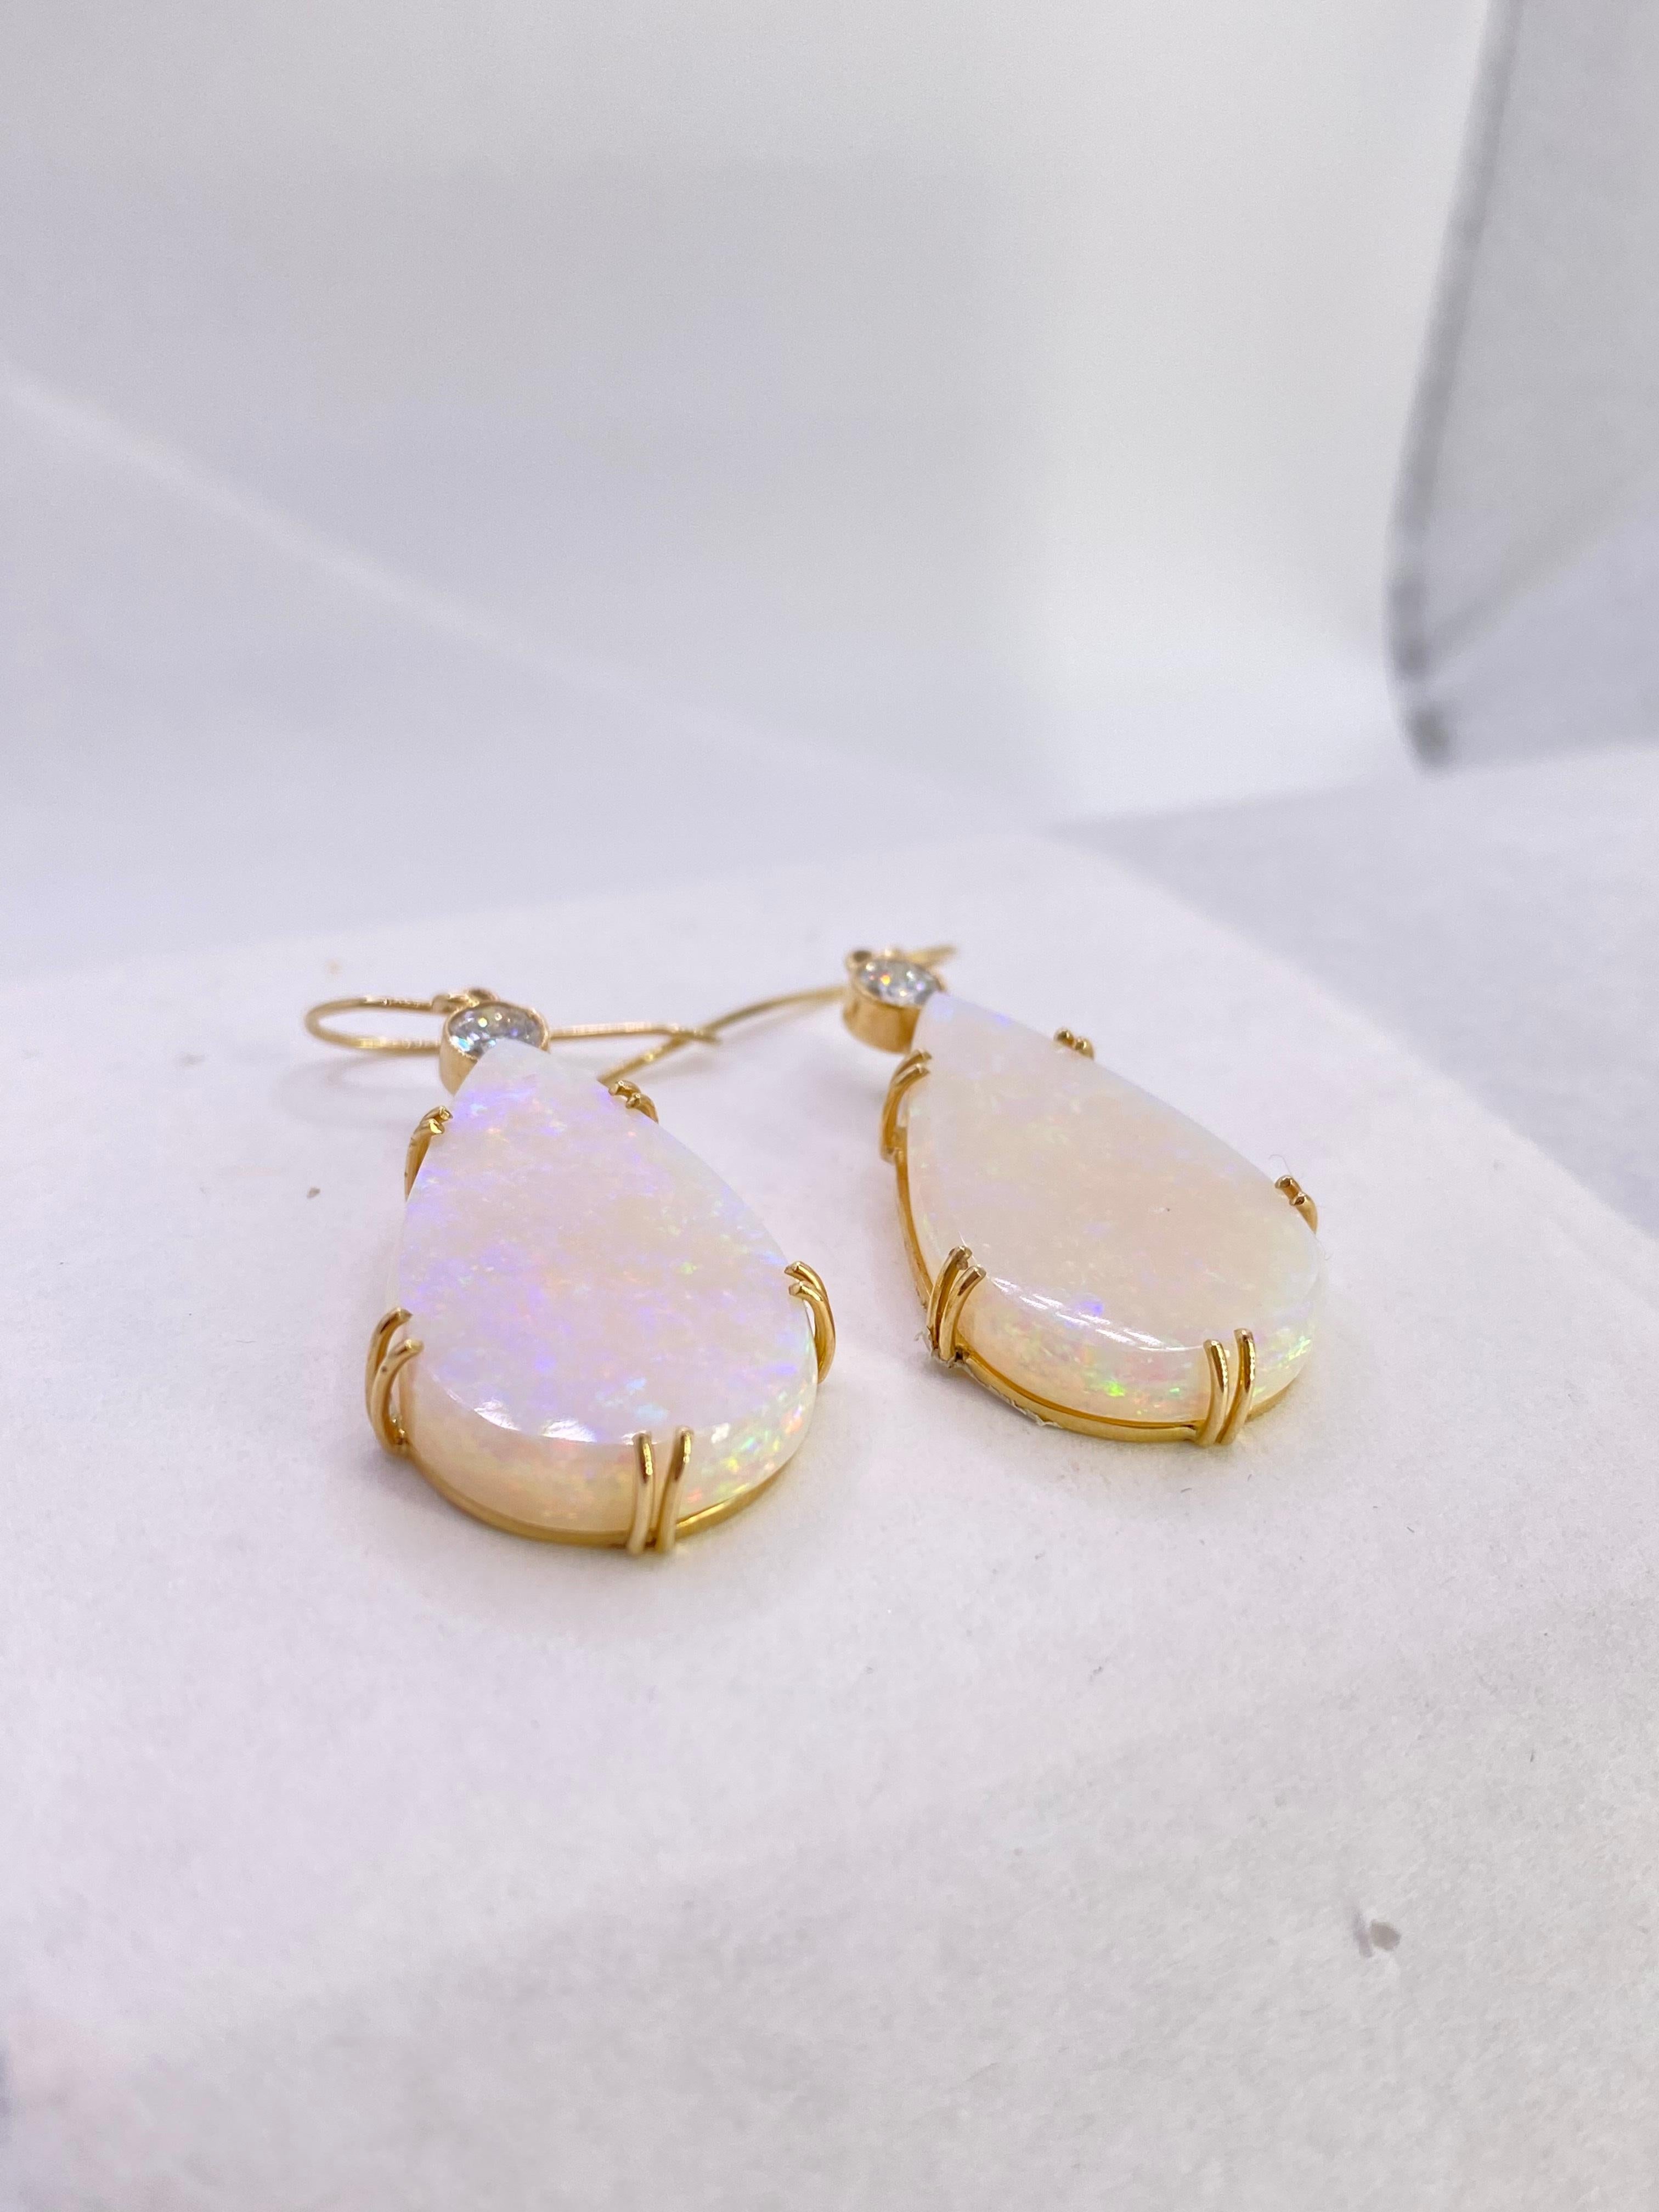 Brilliant Cut Australian Opal and Diamond Yellow Gold Earrings